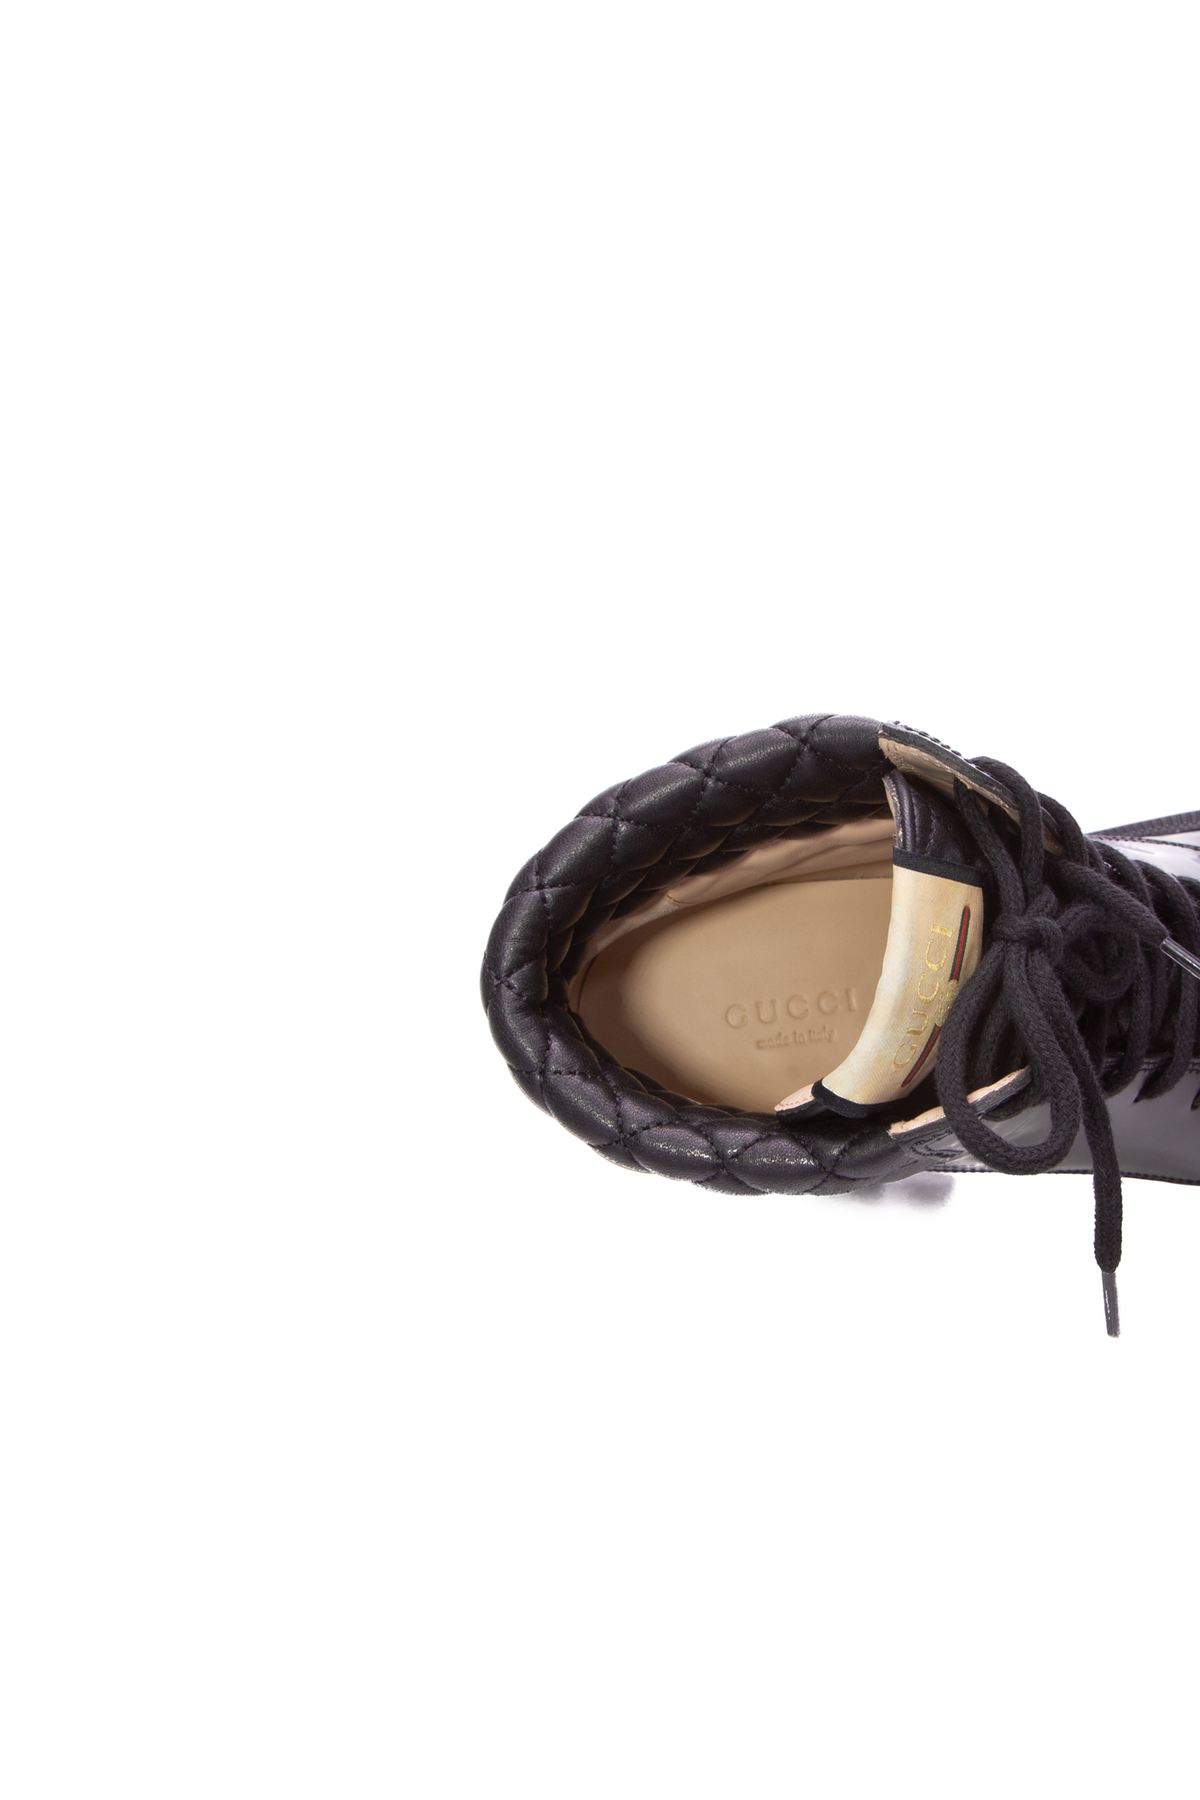 Louis Vuitton Star Trail Ankle Leather Boots Size EU 39.5 US 9.5